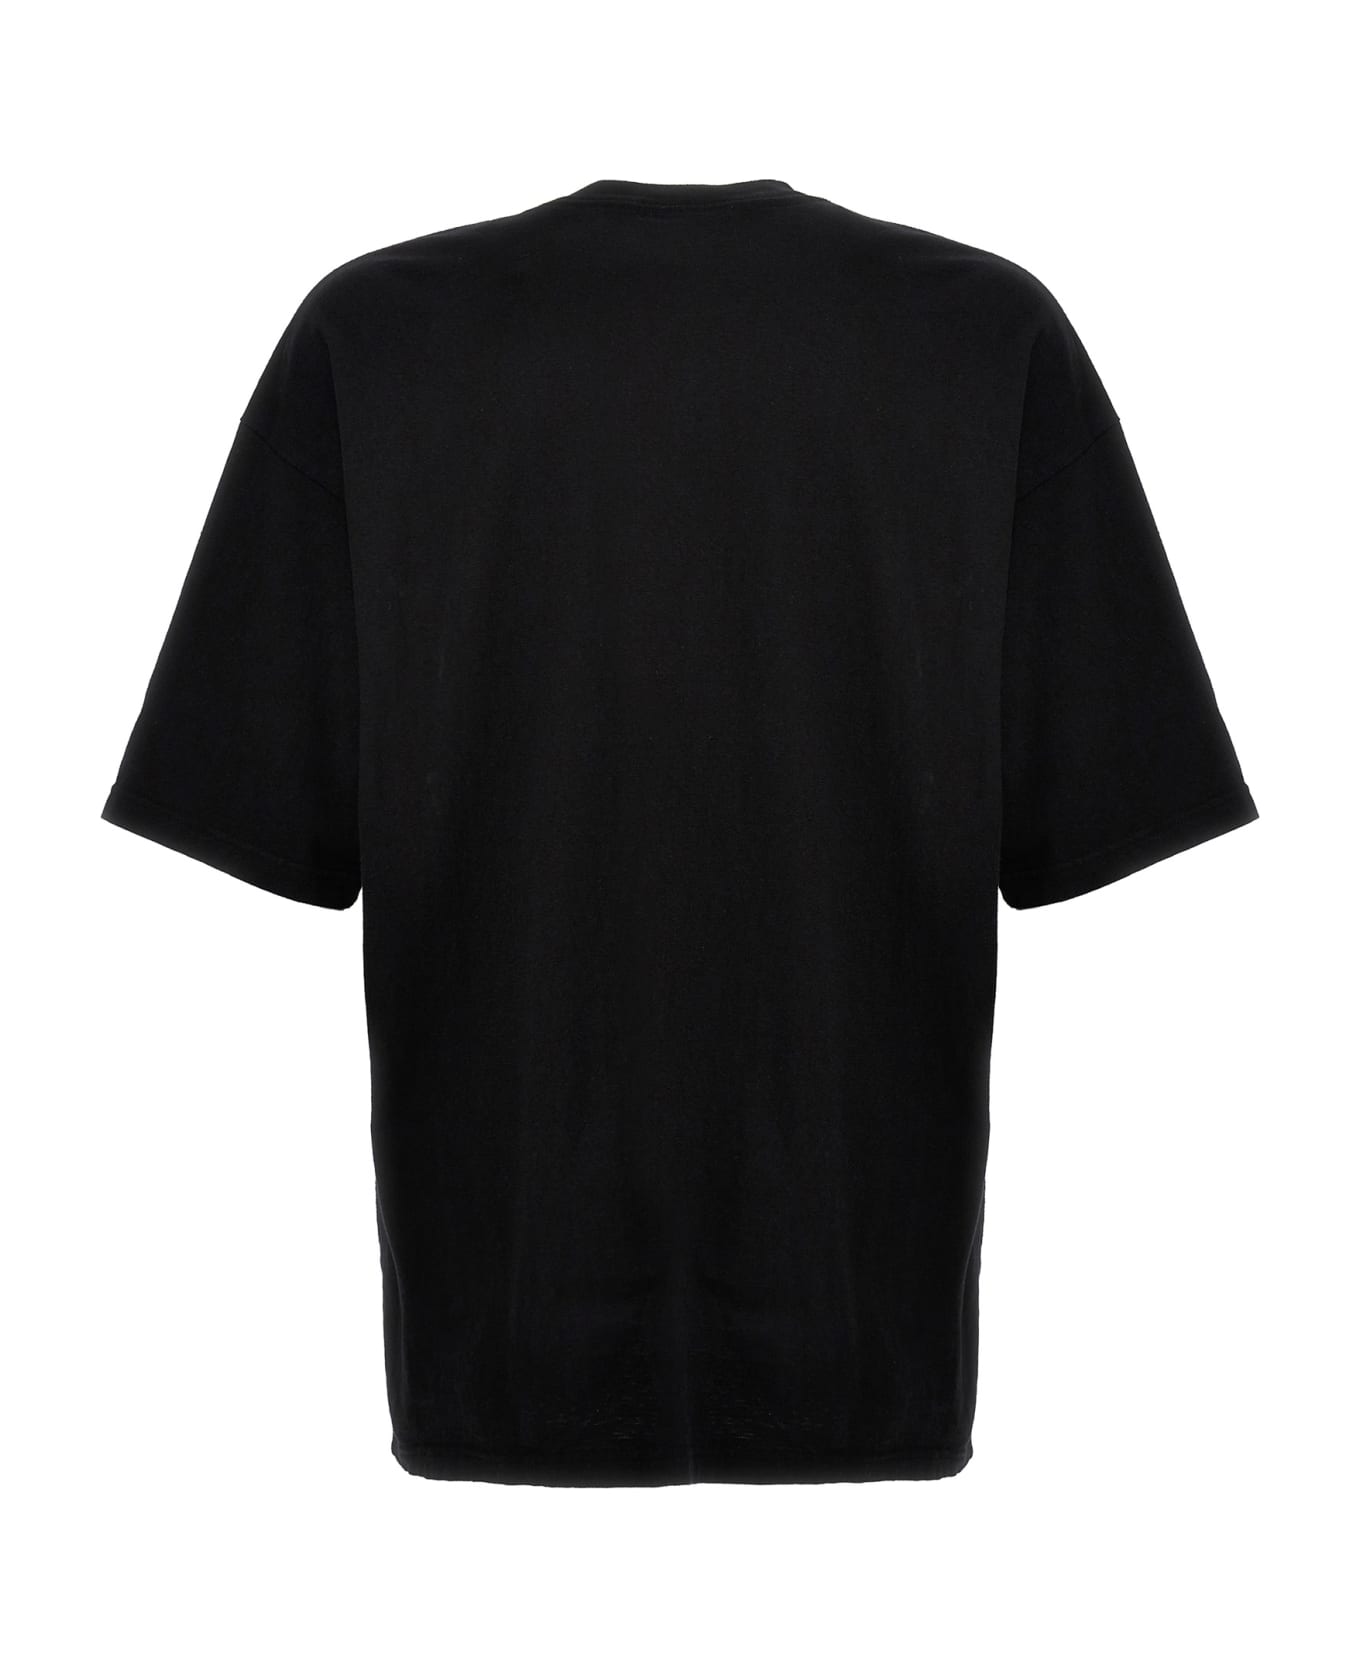 Undercover Jun Takahashi Printed T-shirt - Black  